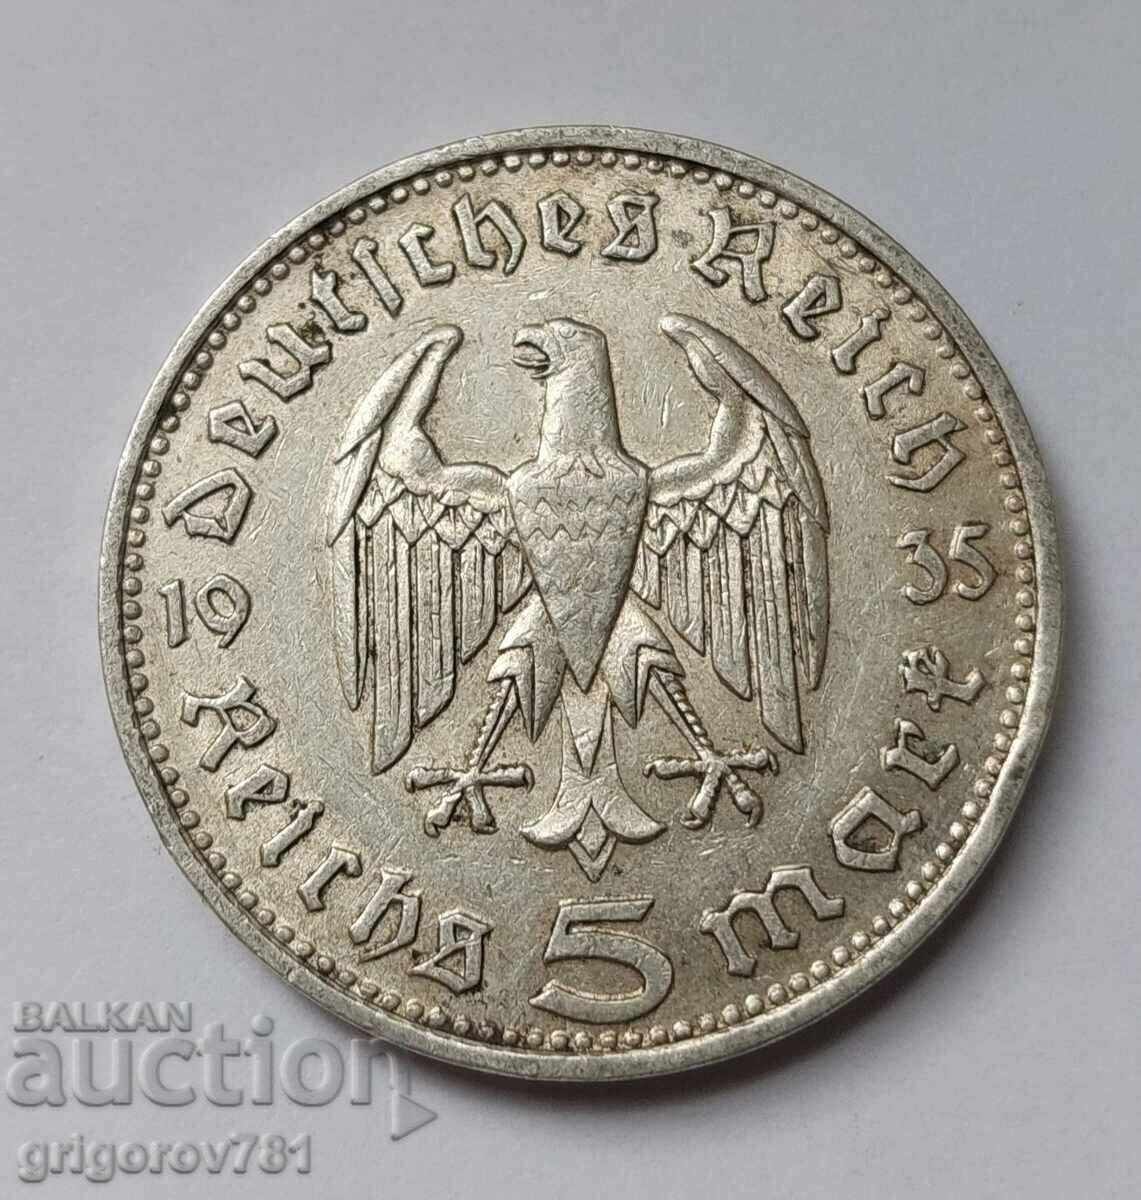 5 Mark Silver Γερμανία 1935 D III Ασημένιο νόμισμα του Ράιχ #22